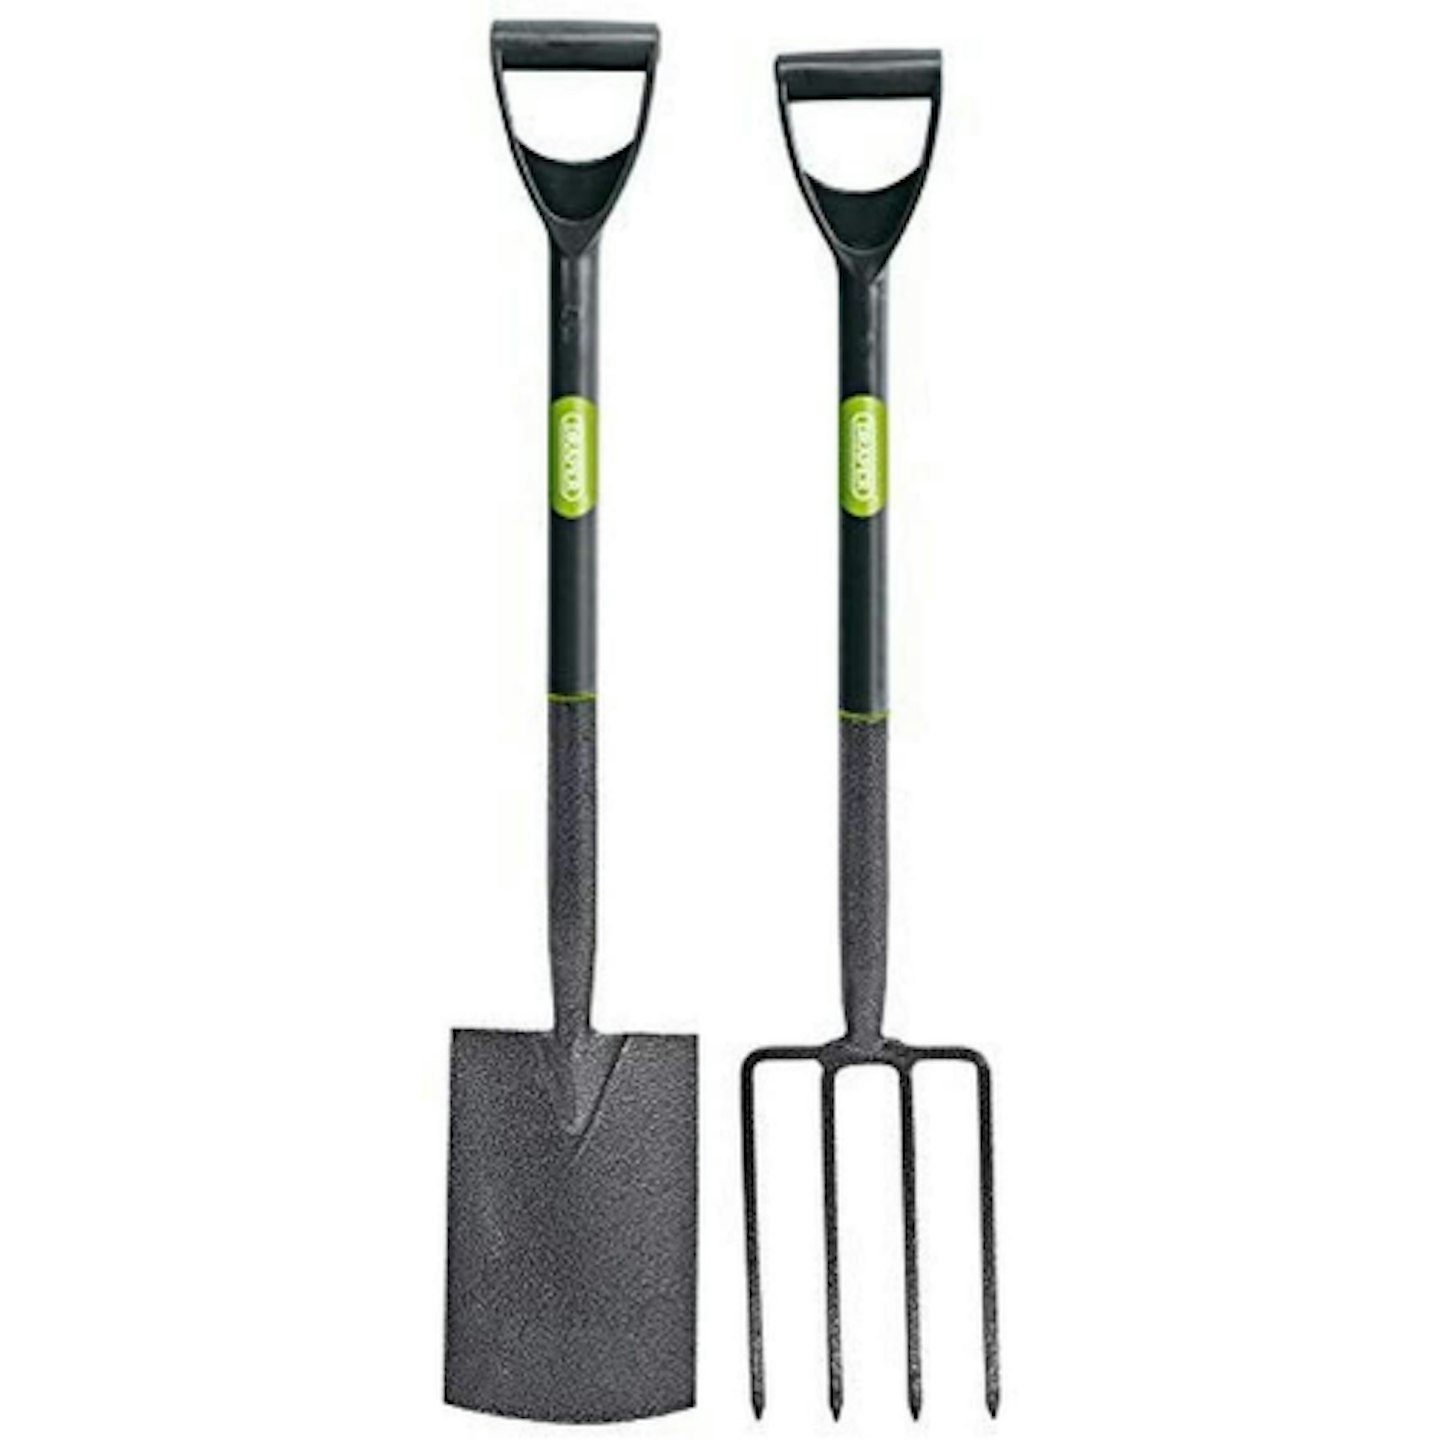 Draper 83971 Carbon Steel Garden Fork and Spade Set